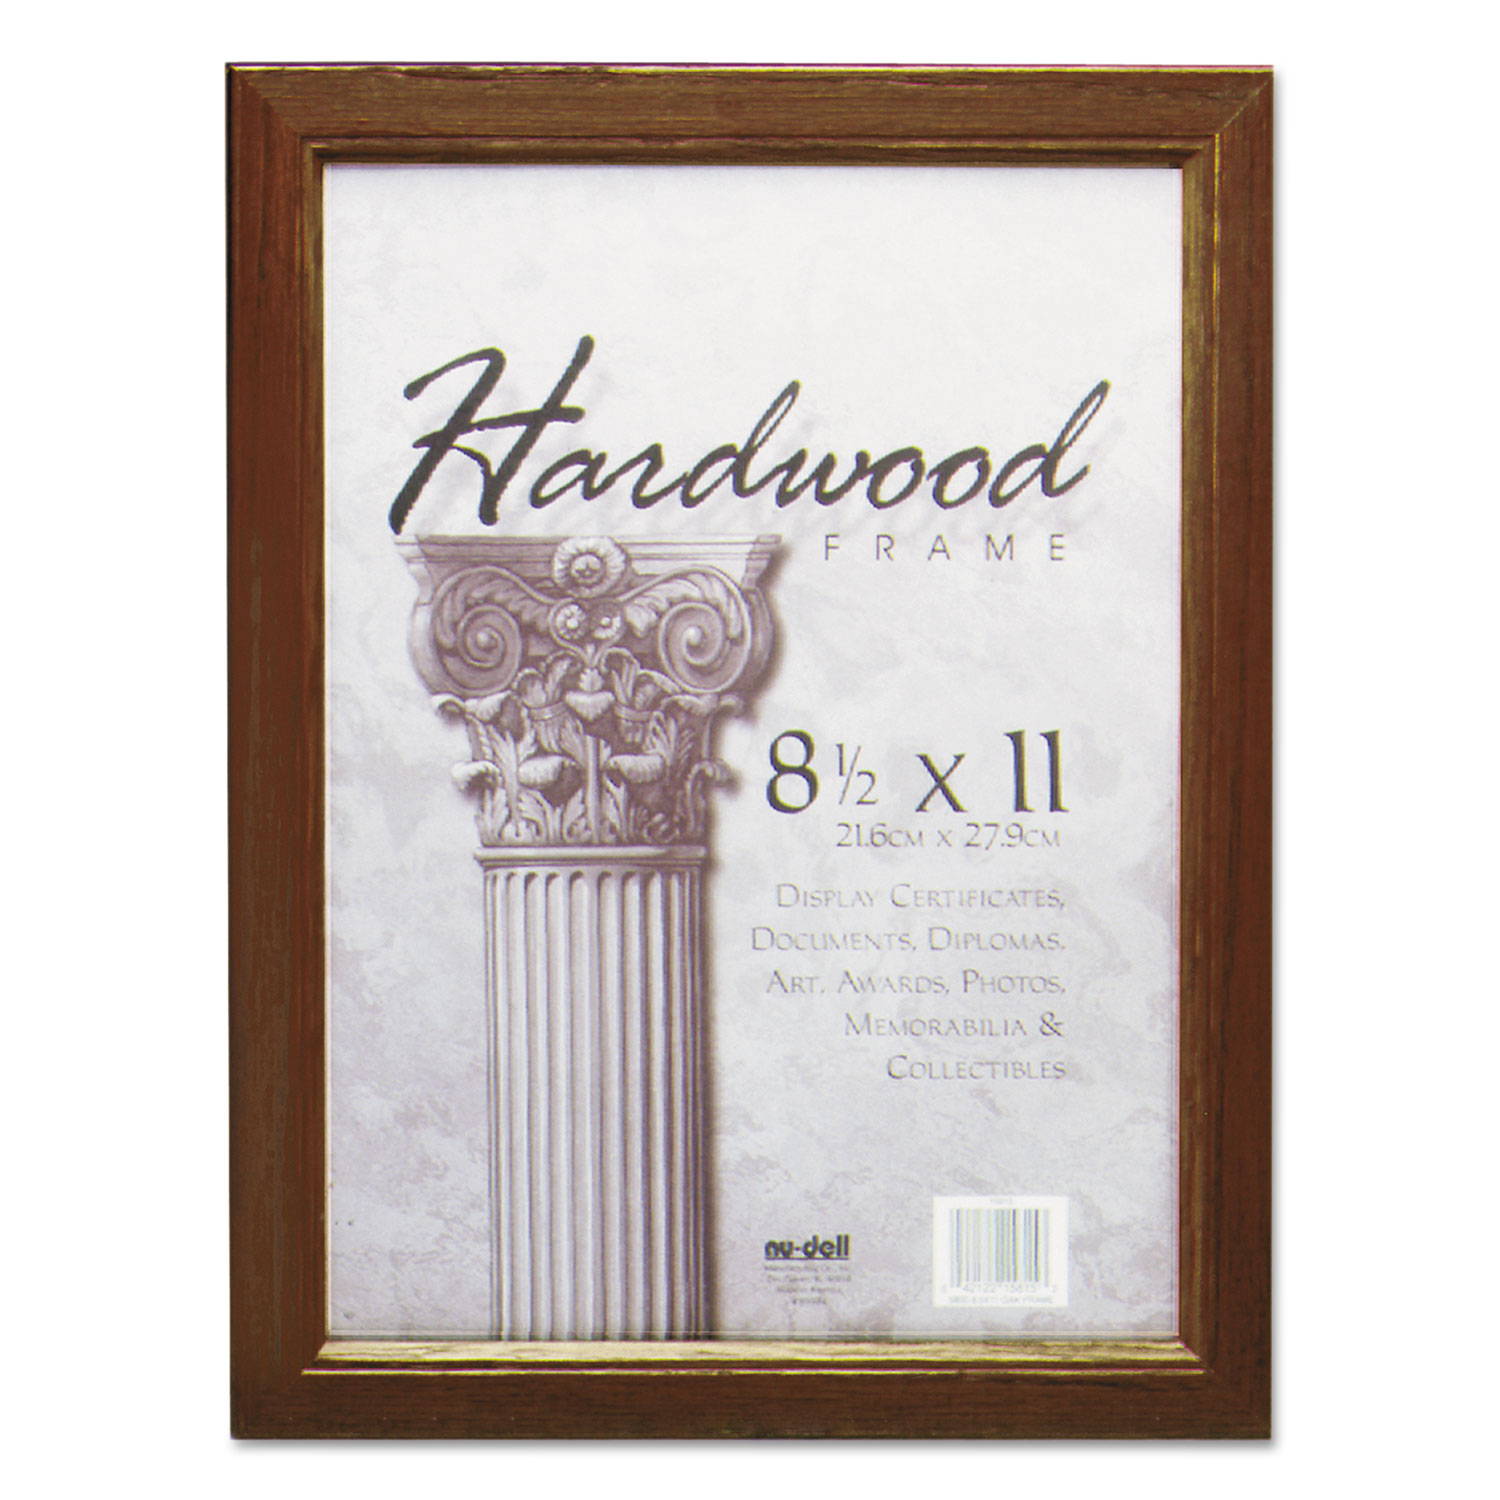  NuDell 15815 Solid Oak Hardwood Frame, 8-1/2 x 11, Walnut Finish (NUD15815) 